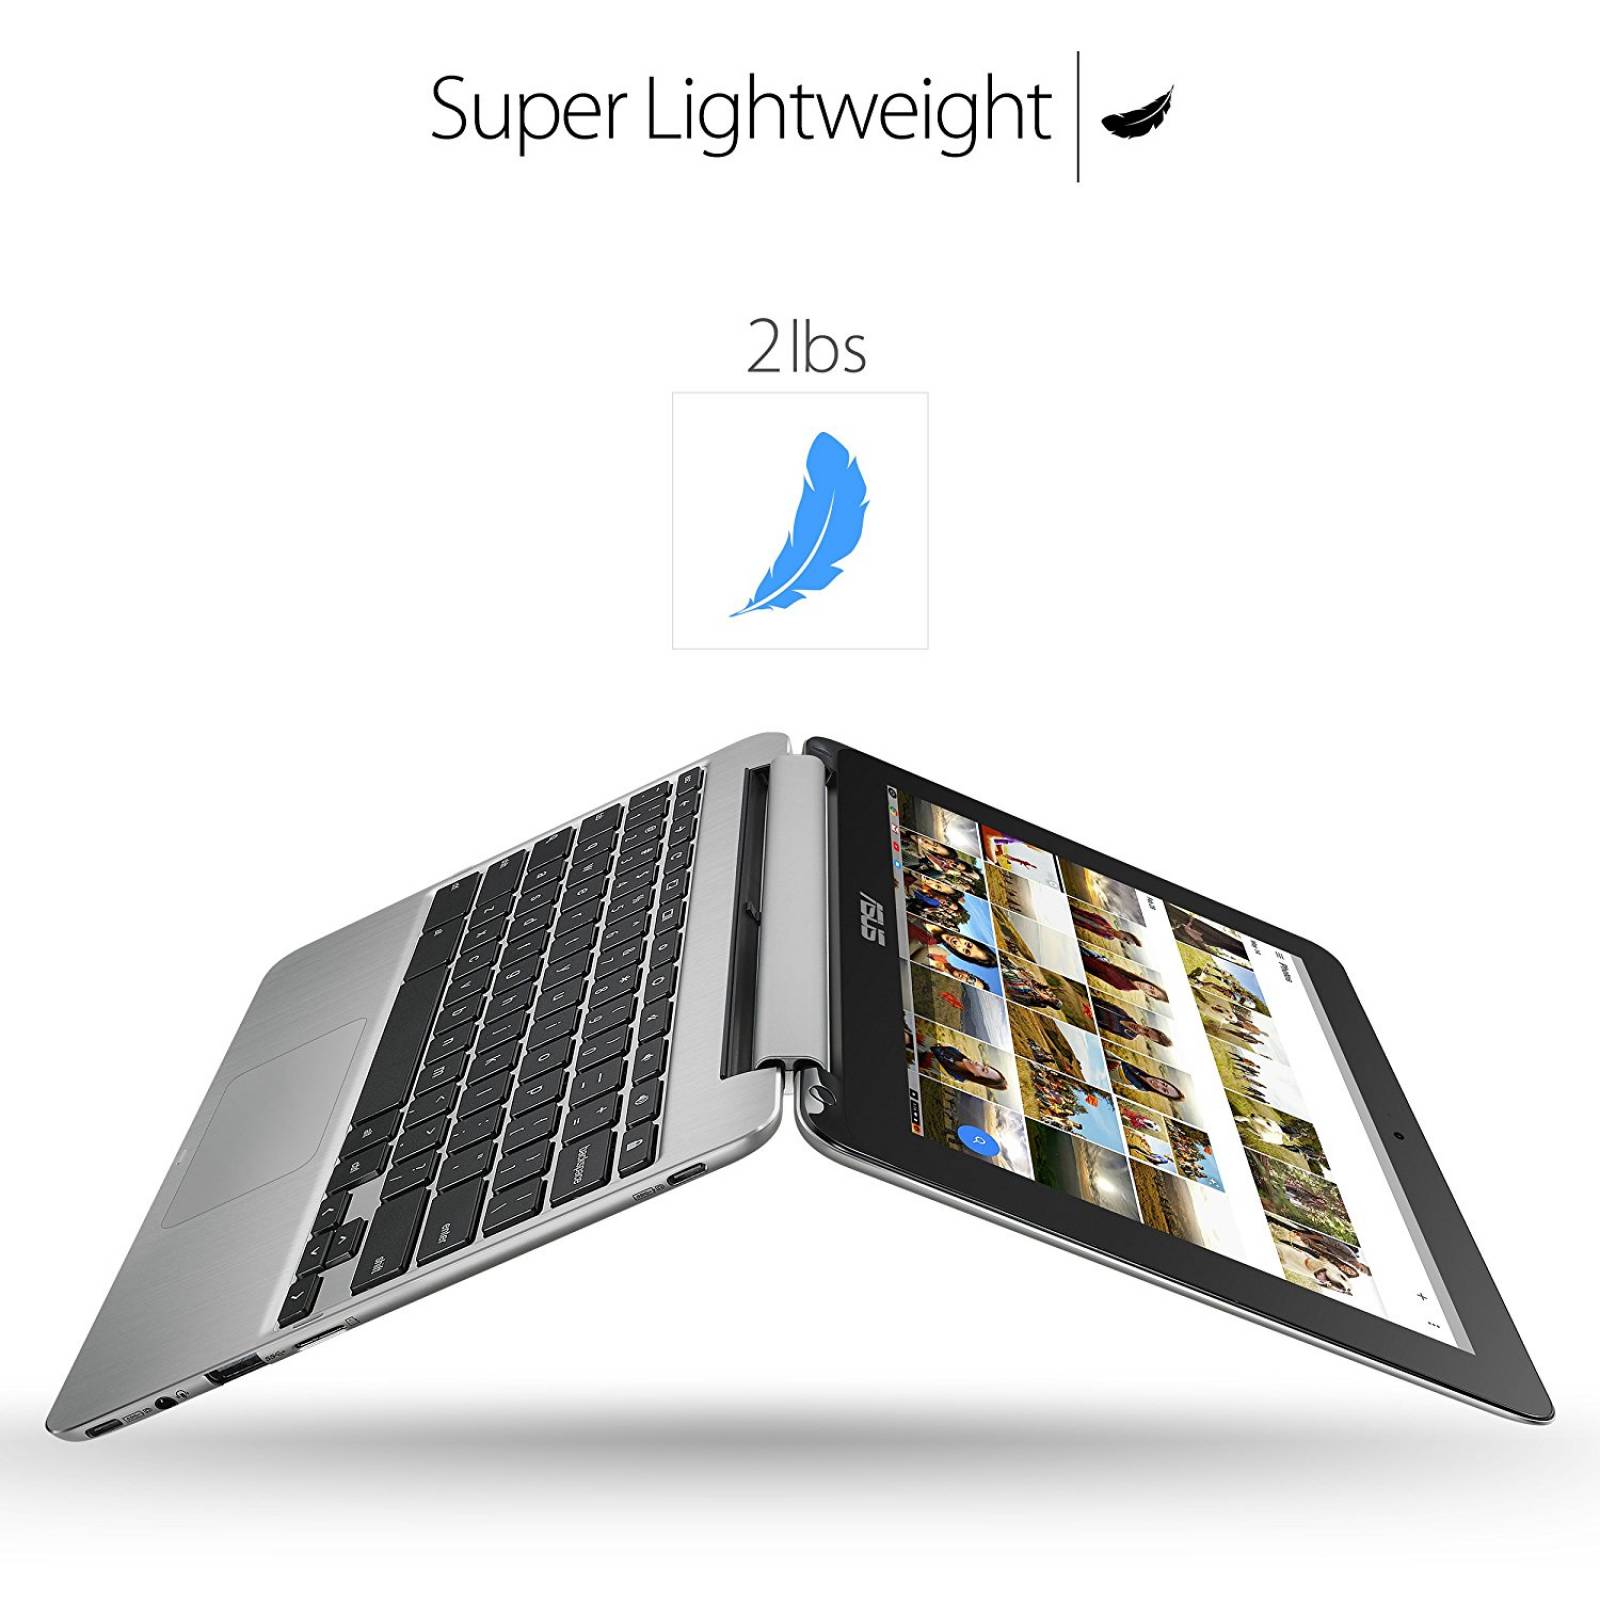 Laptop Touch Asus Chromebook Flip C101pa 10 Rk3399 4gb 16gb